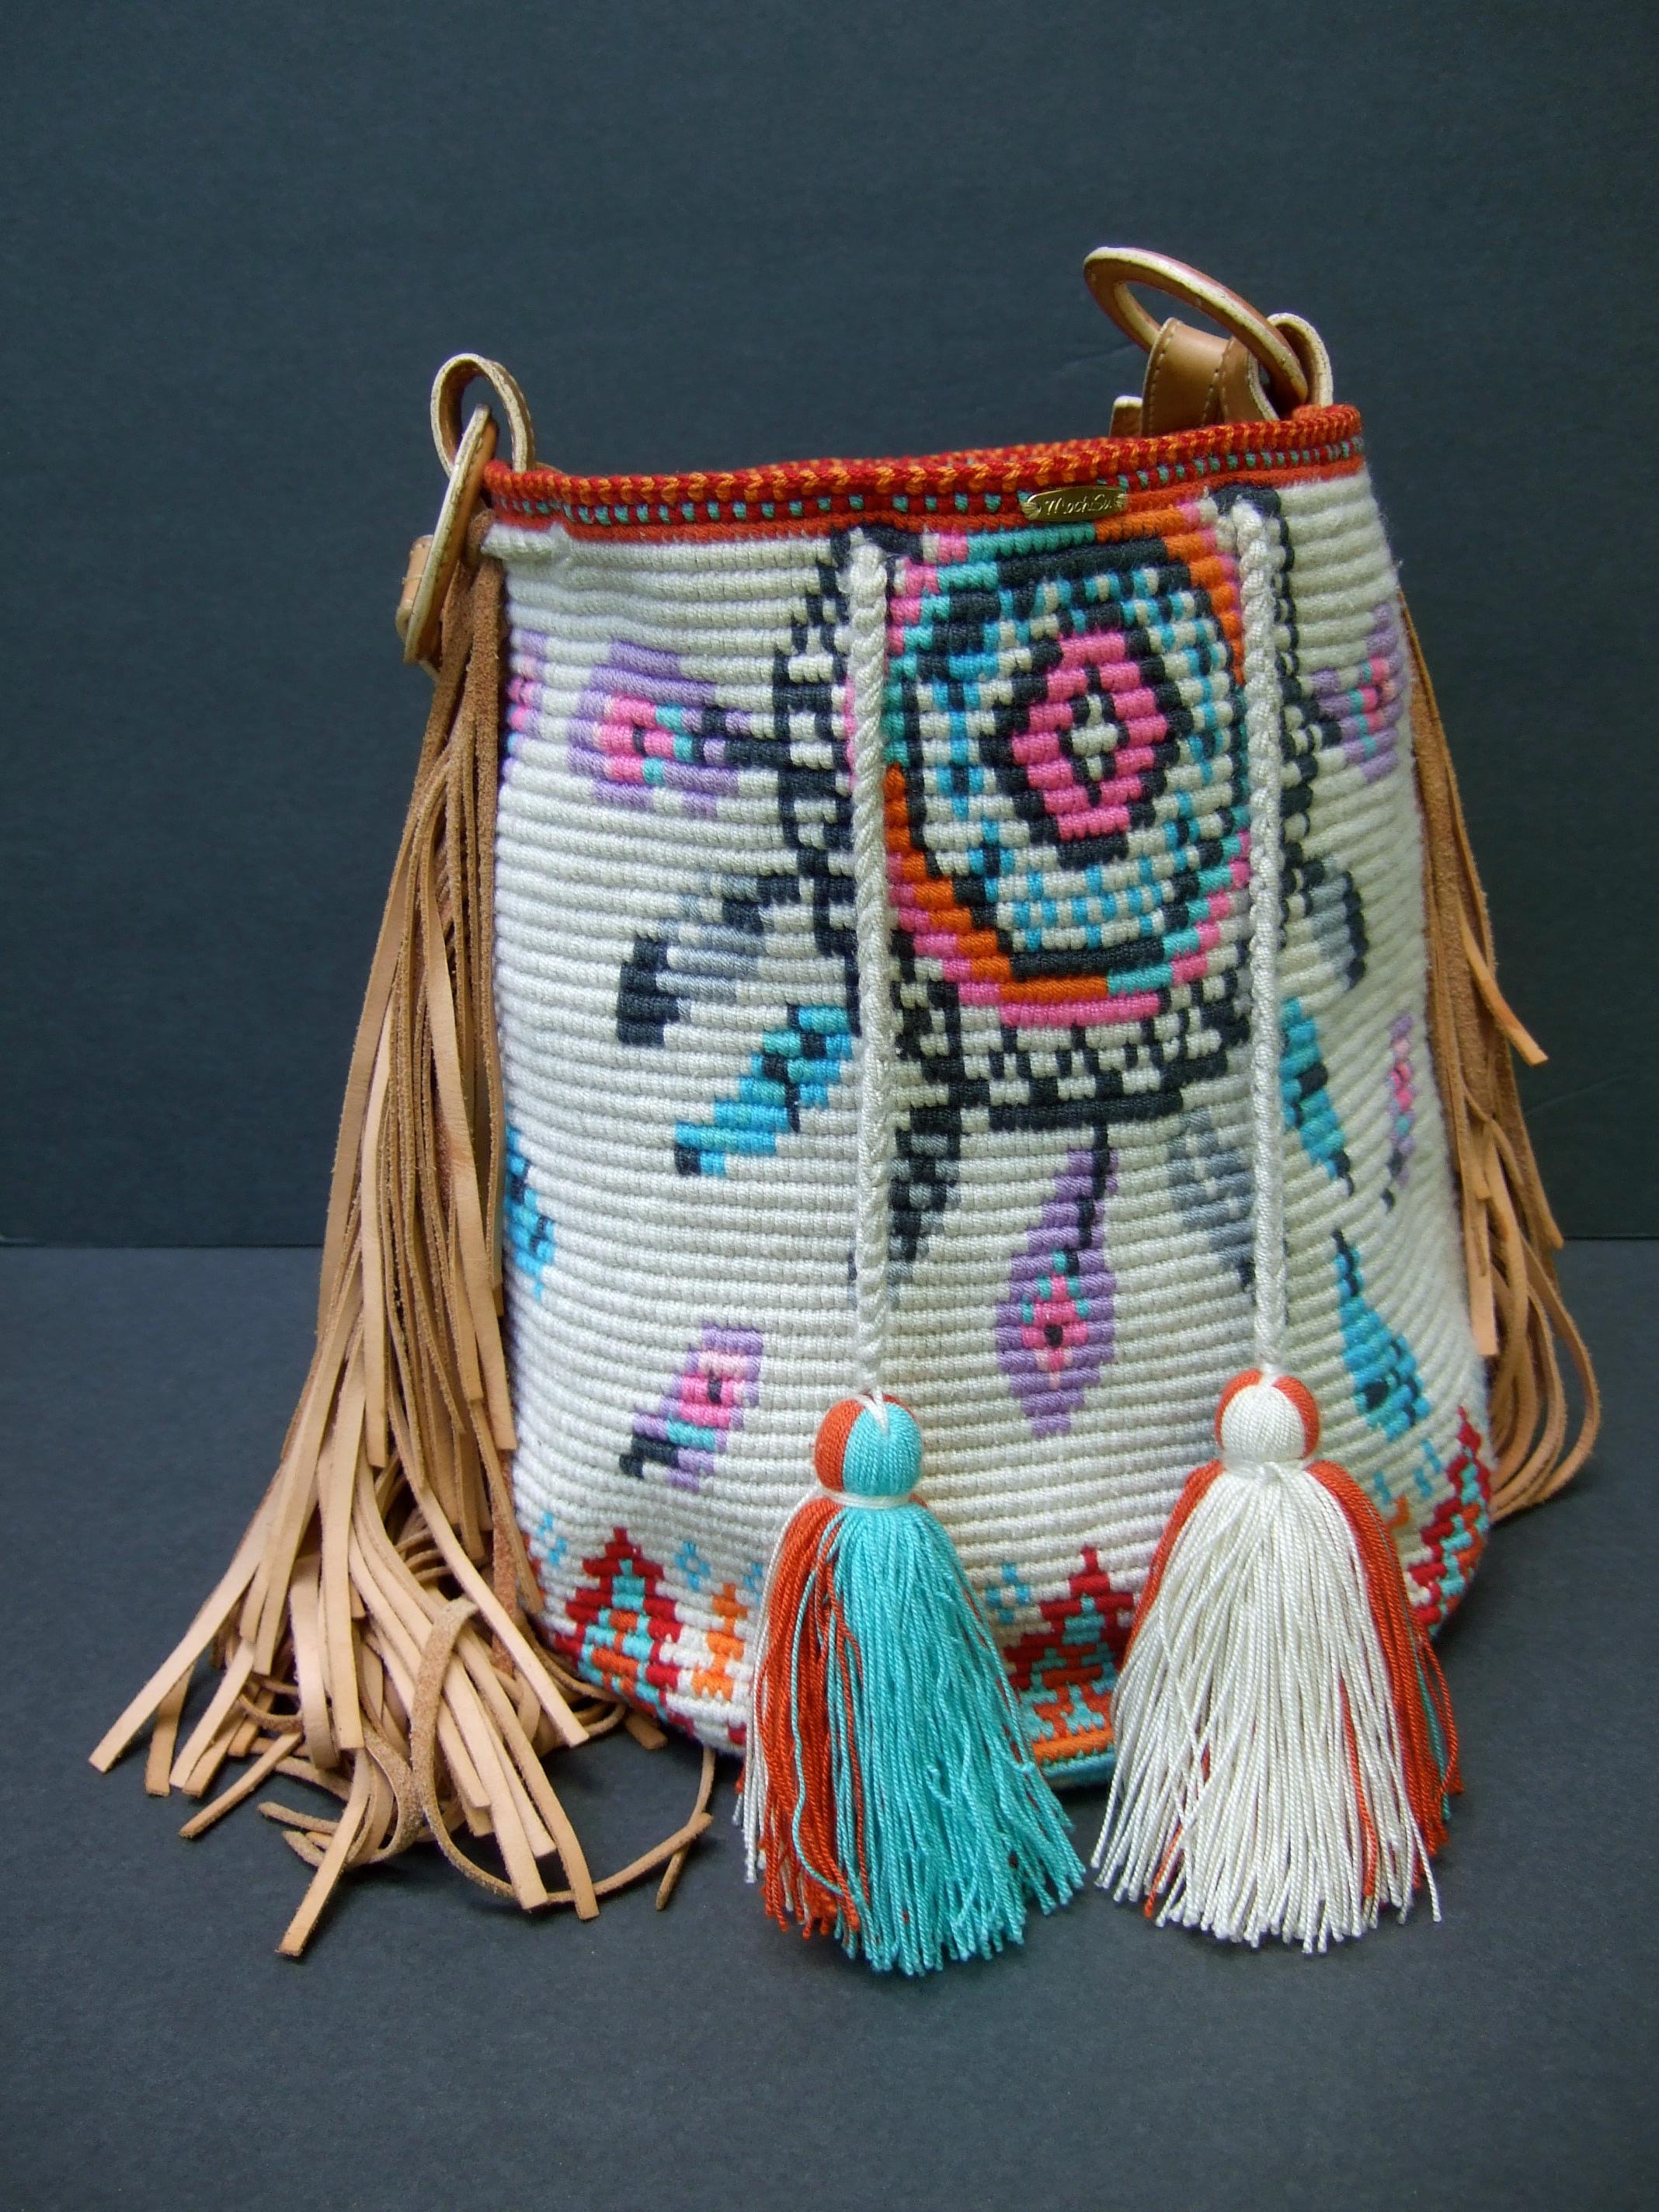  Handmade Woven Wool Knit Artisan Bucket Shoulder Bag c 1990s For Sale 4